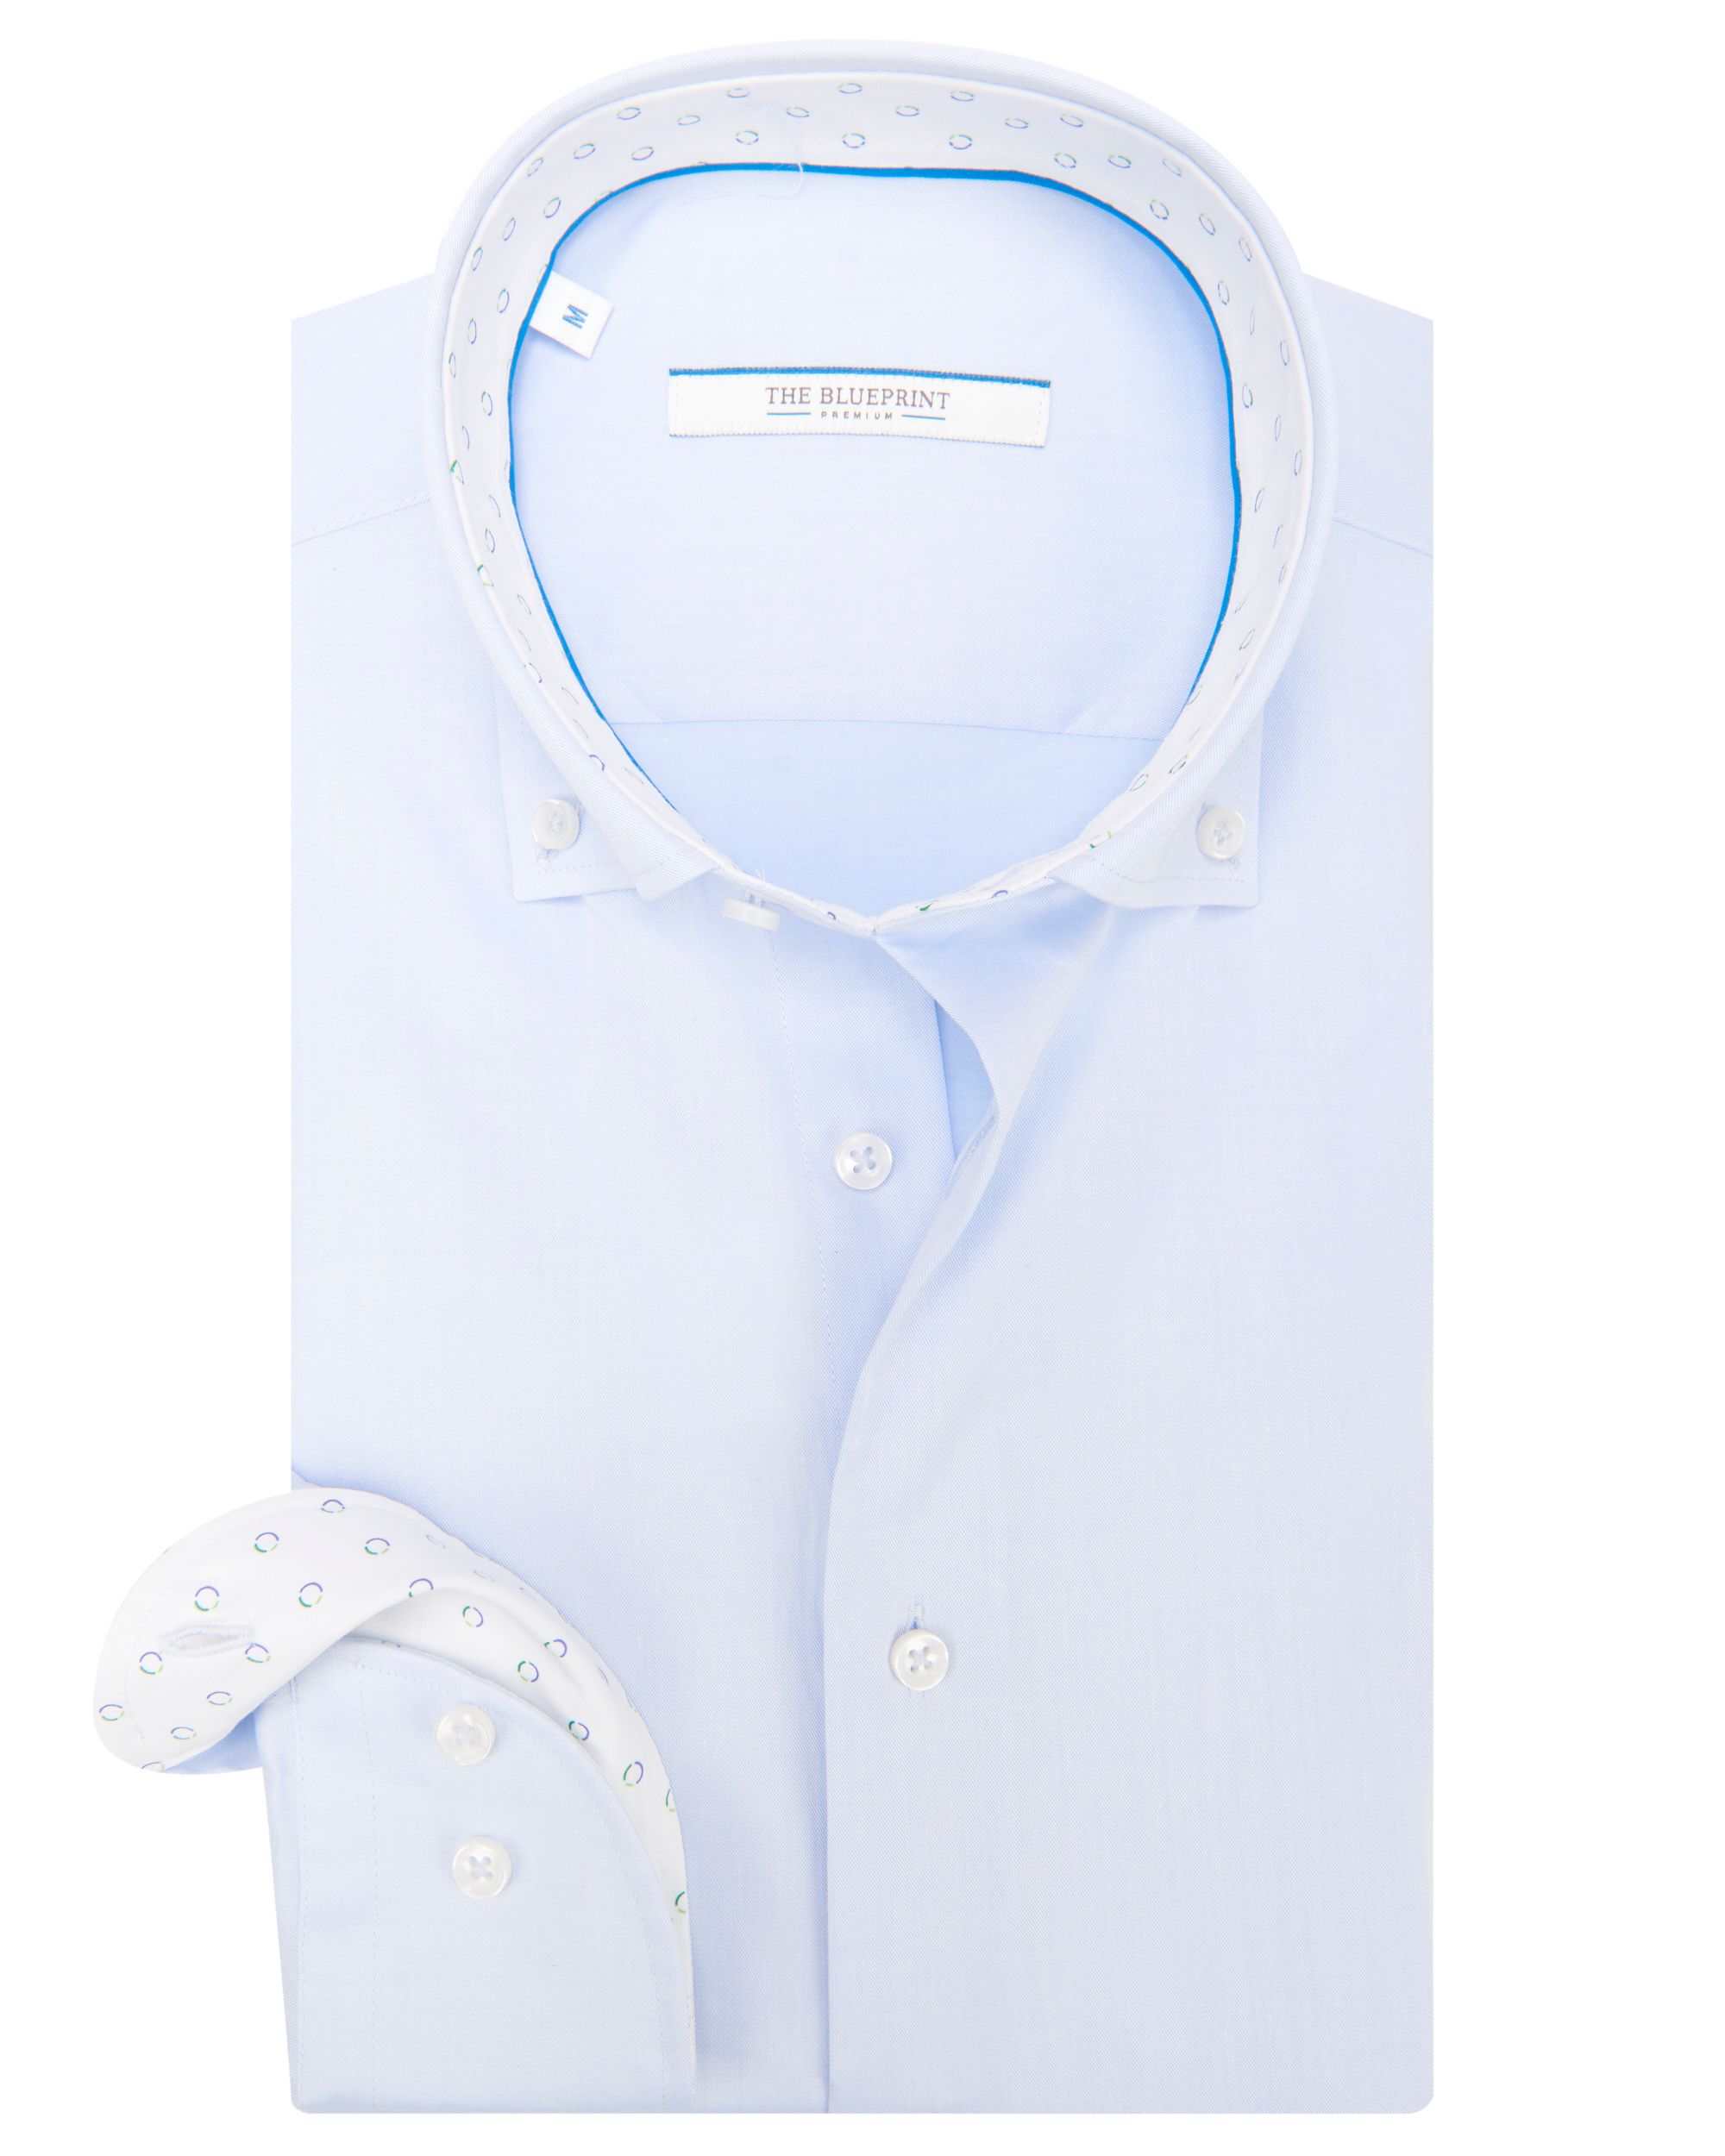 The BLUEPRINT Premium Trendy Overhemd LM Lichtblauw uni 078179-001-L